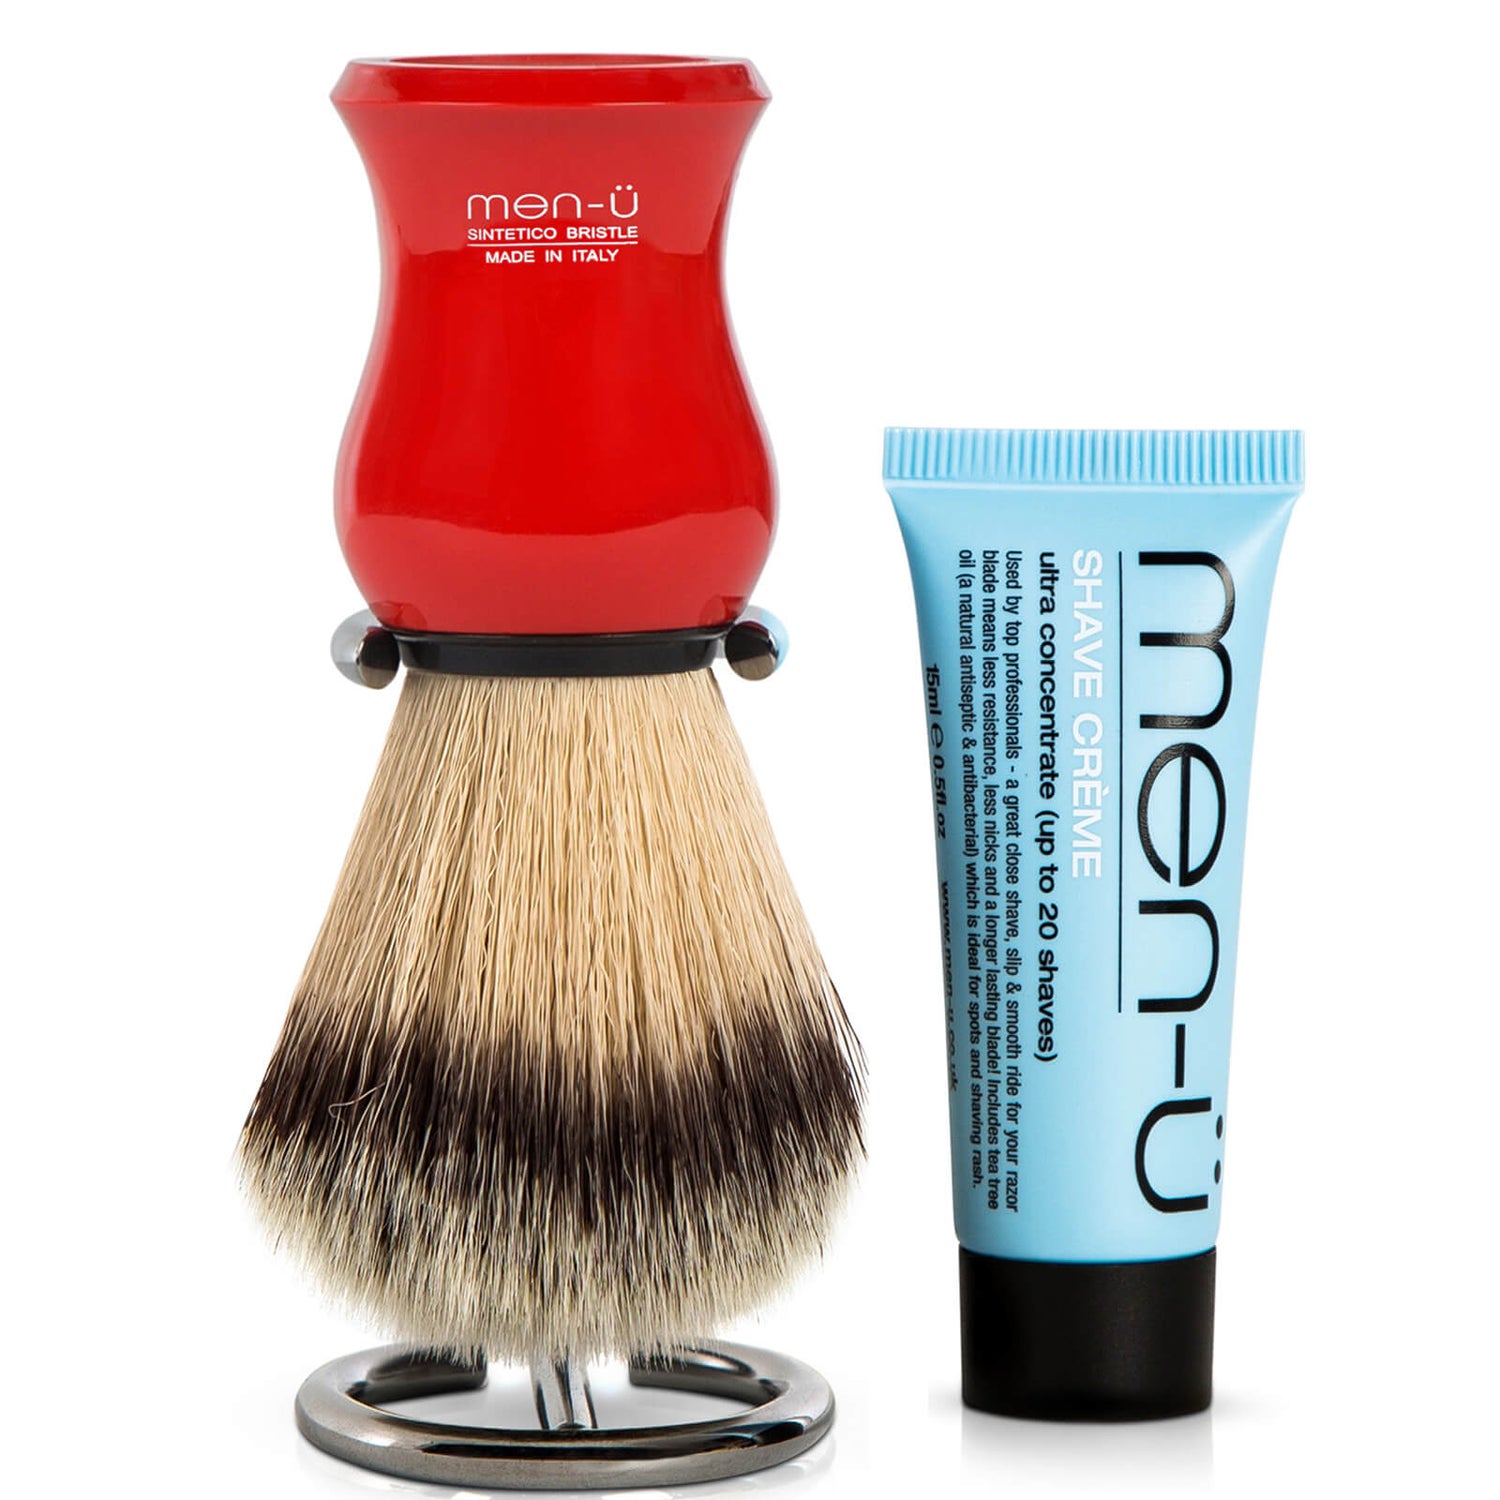 men-ü DB Premier Shave Brush with Chrome Stand - 紅色